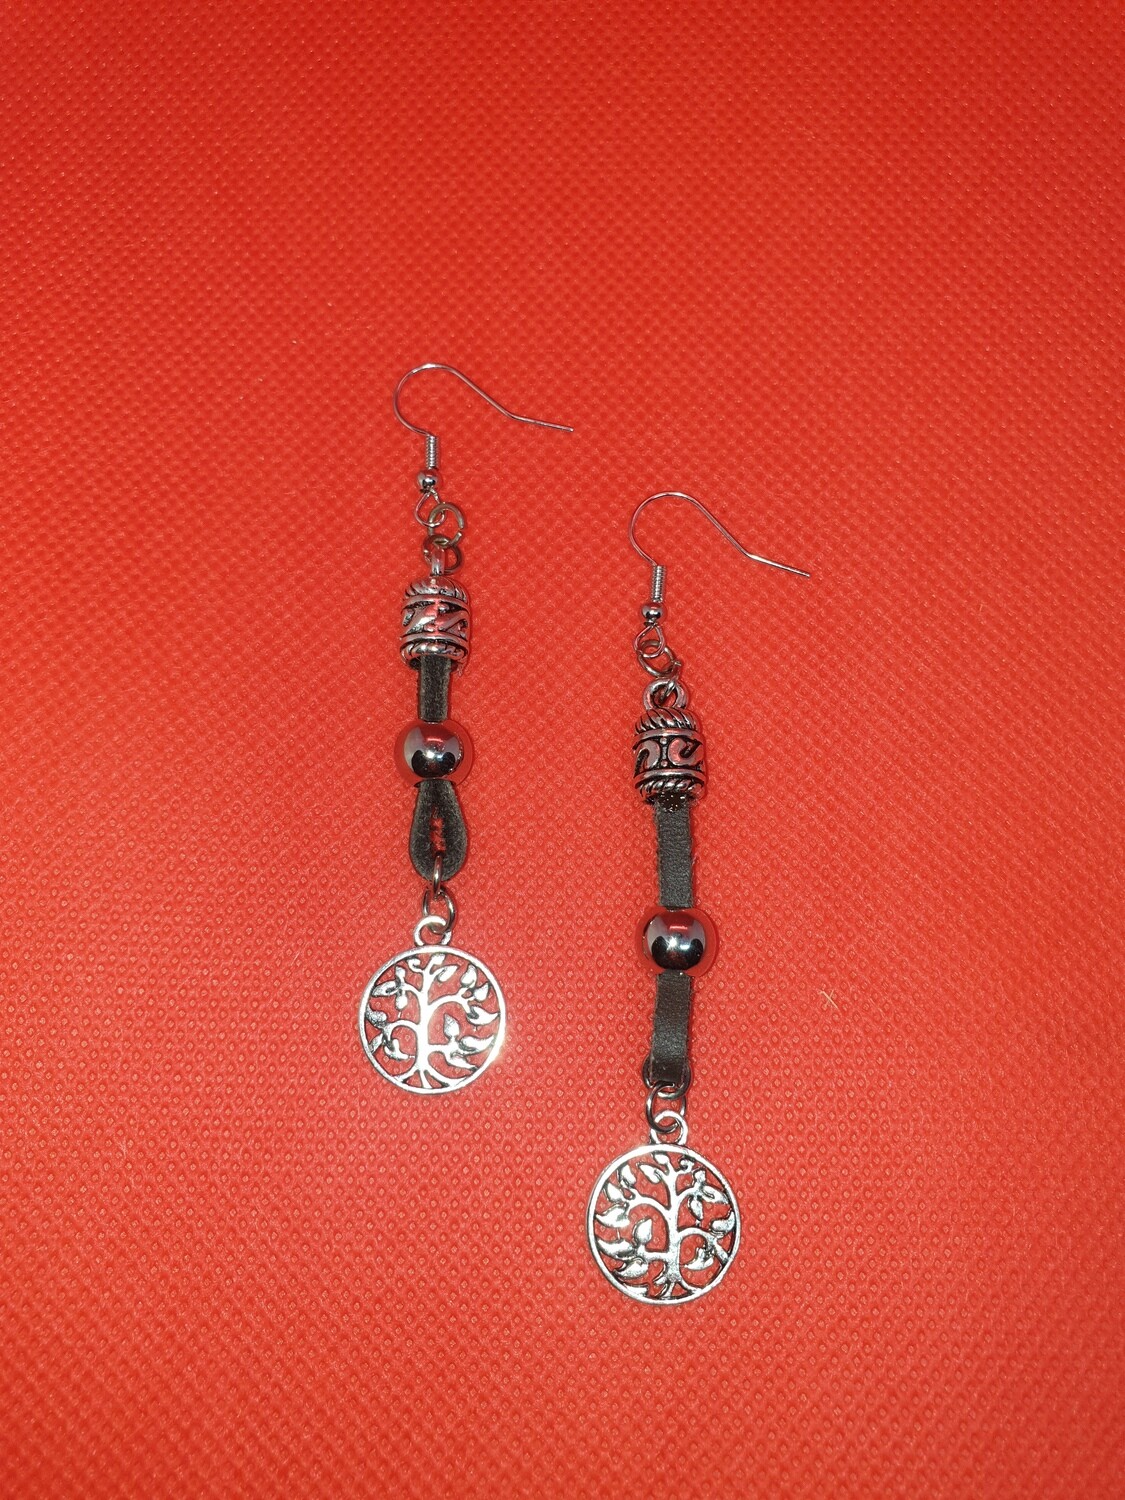 Leather earrings dangle tree of life